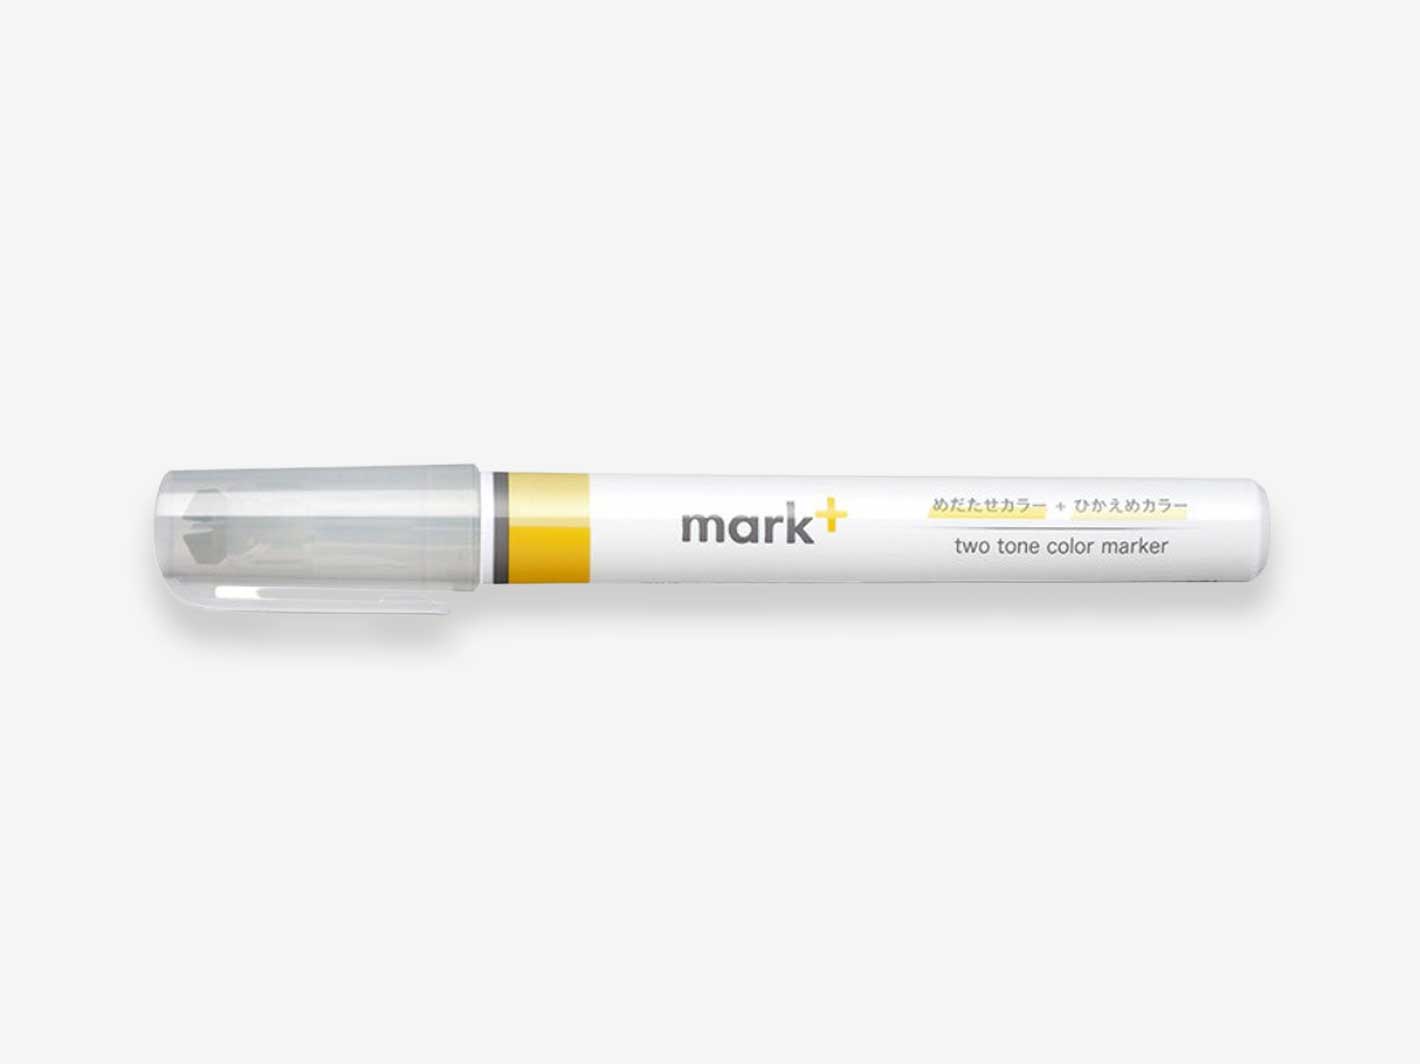 Mark+ 2 Tone Color Marking Pen - Yellow